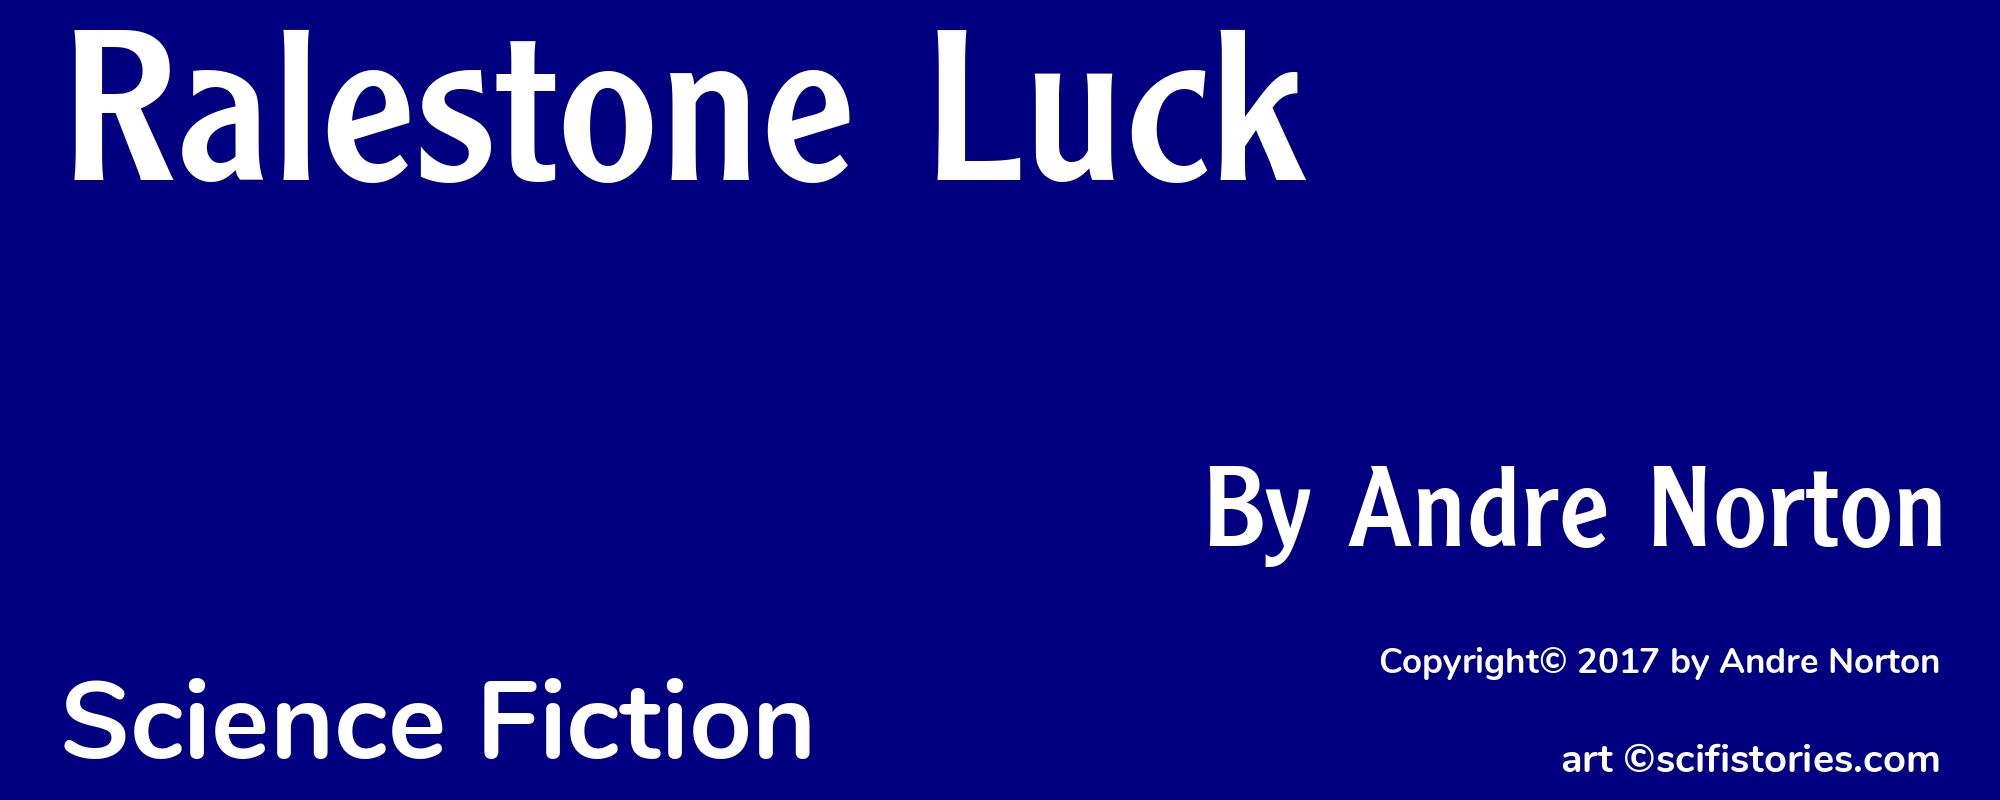 Ralestone Luck - Cover